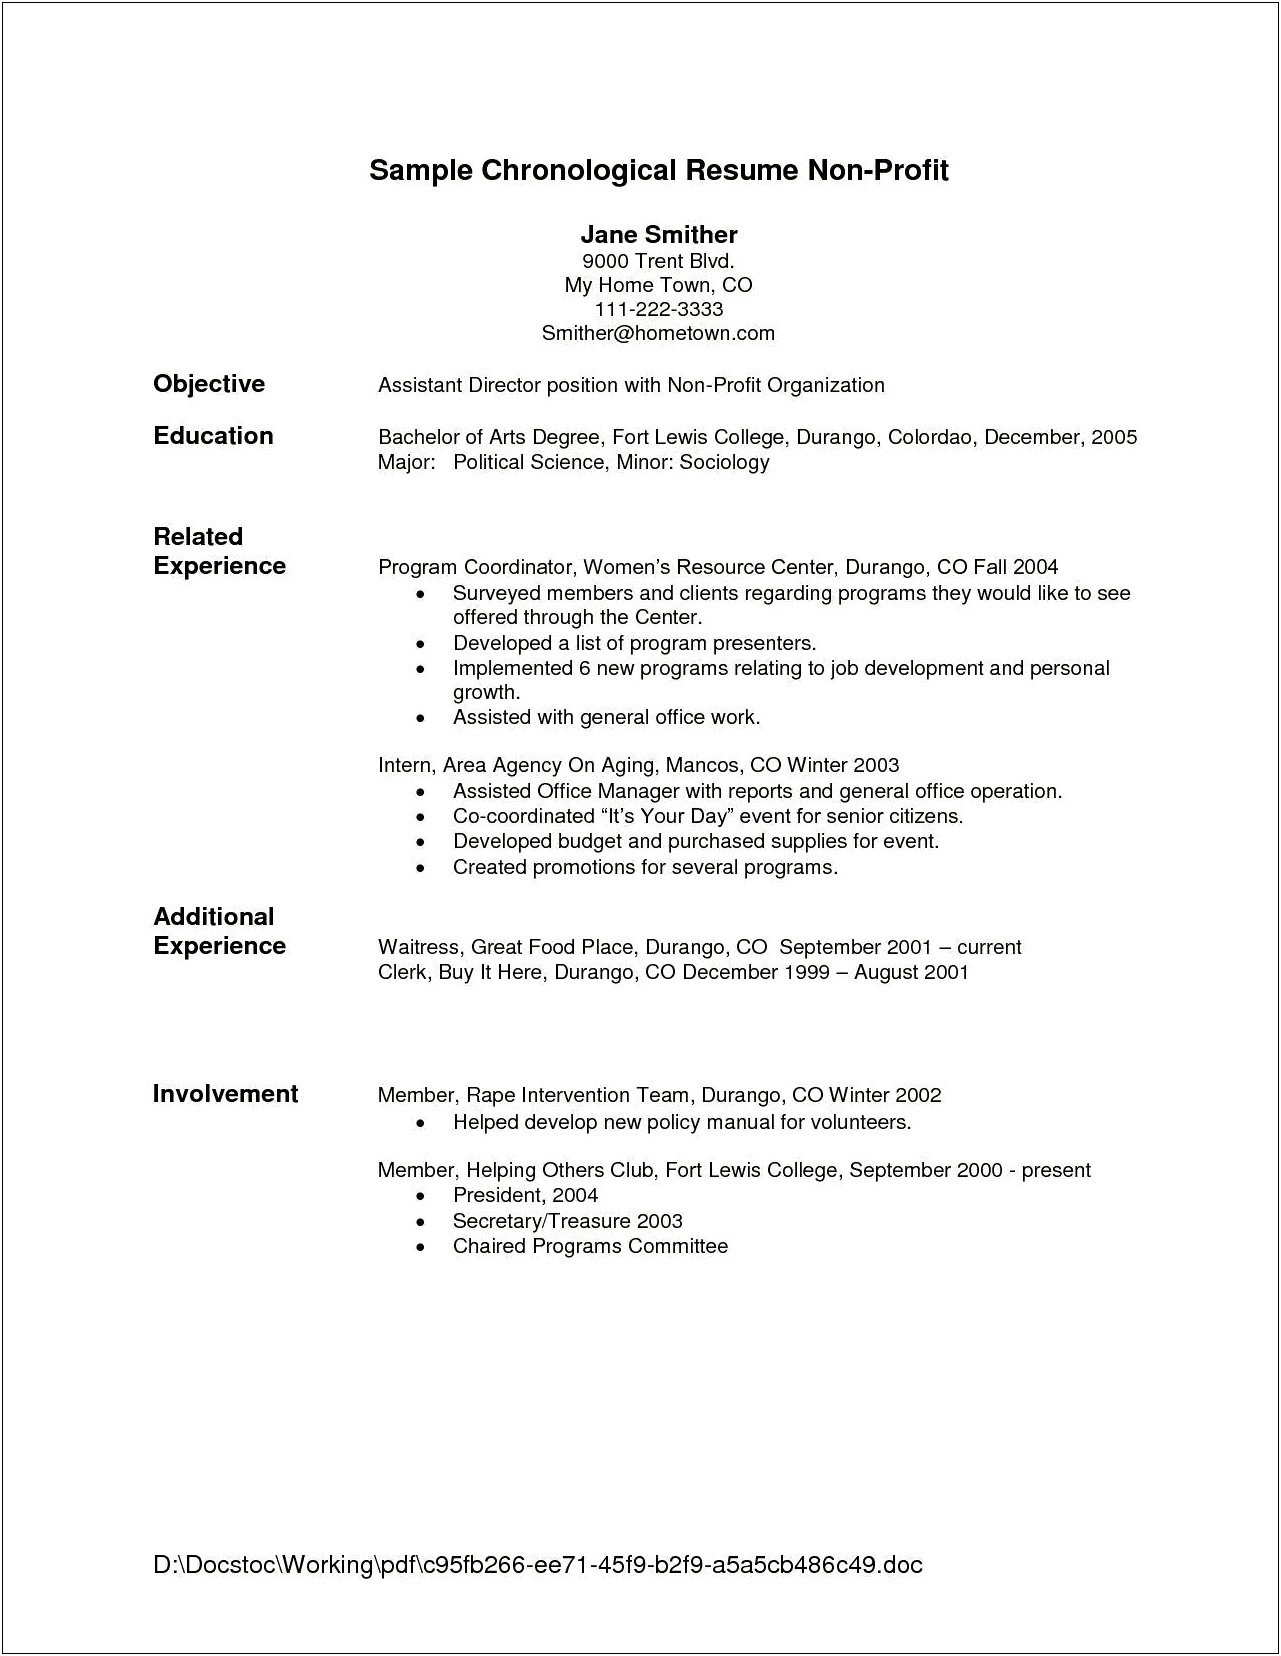 Resume Objective For Corporate Communication Internship Chronological Resume